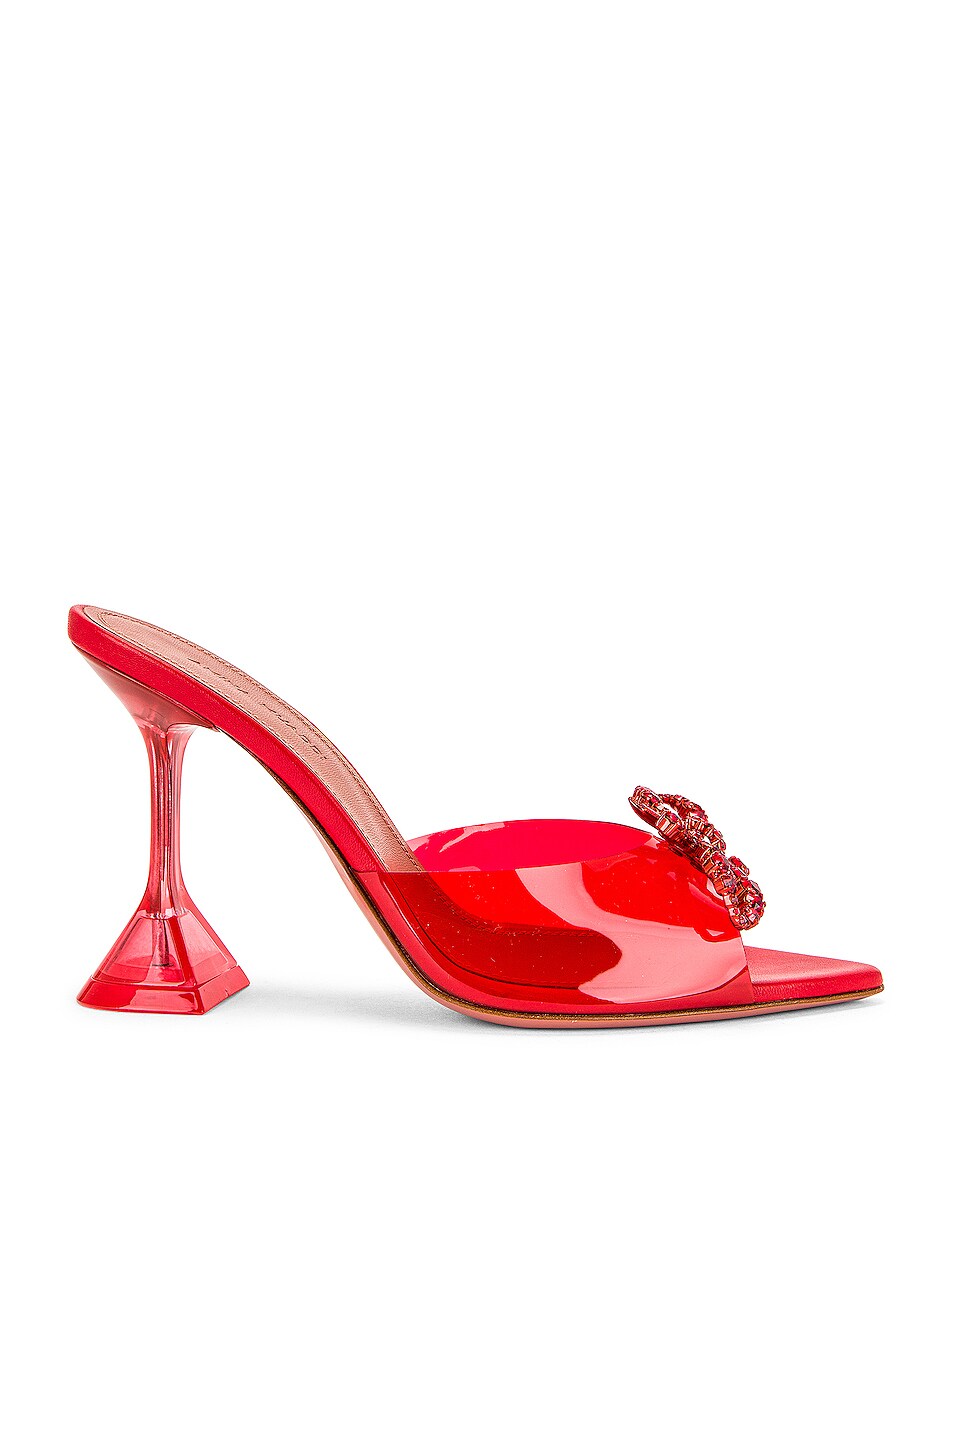 AMINA MUADDI Rosie Glass Slipper in Red & Red Crystal | FWRD